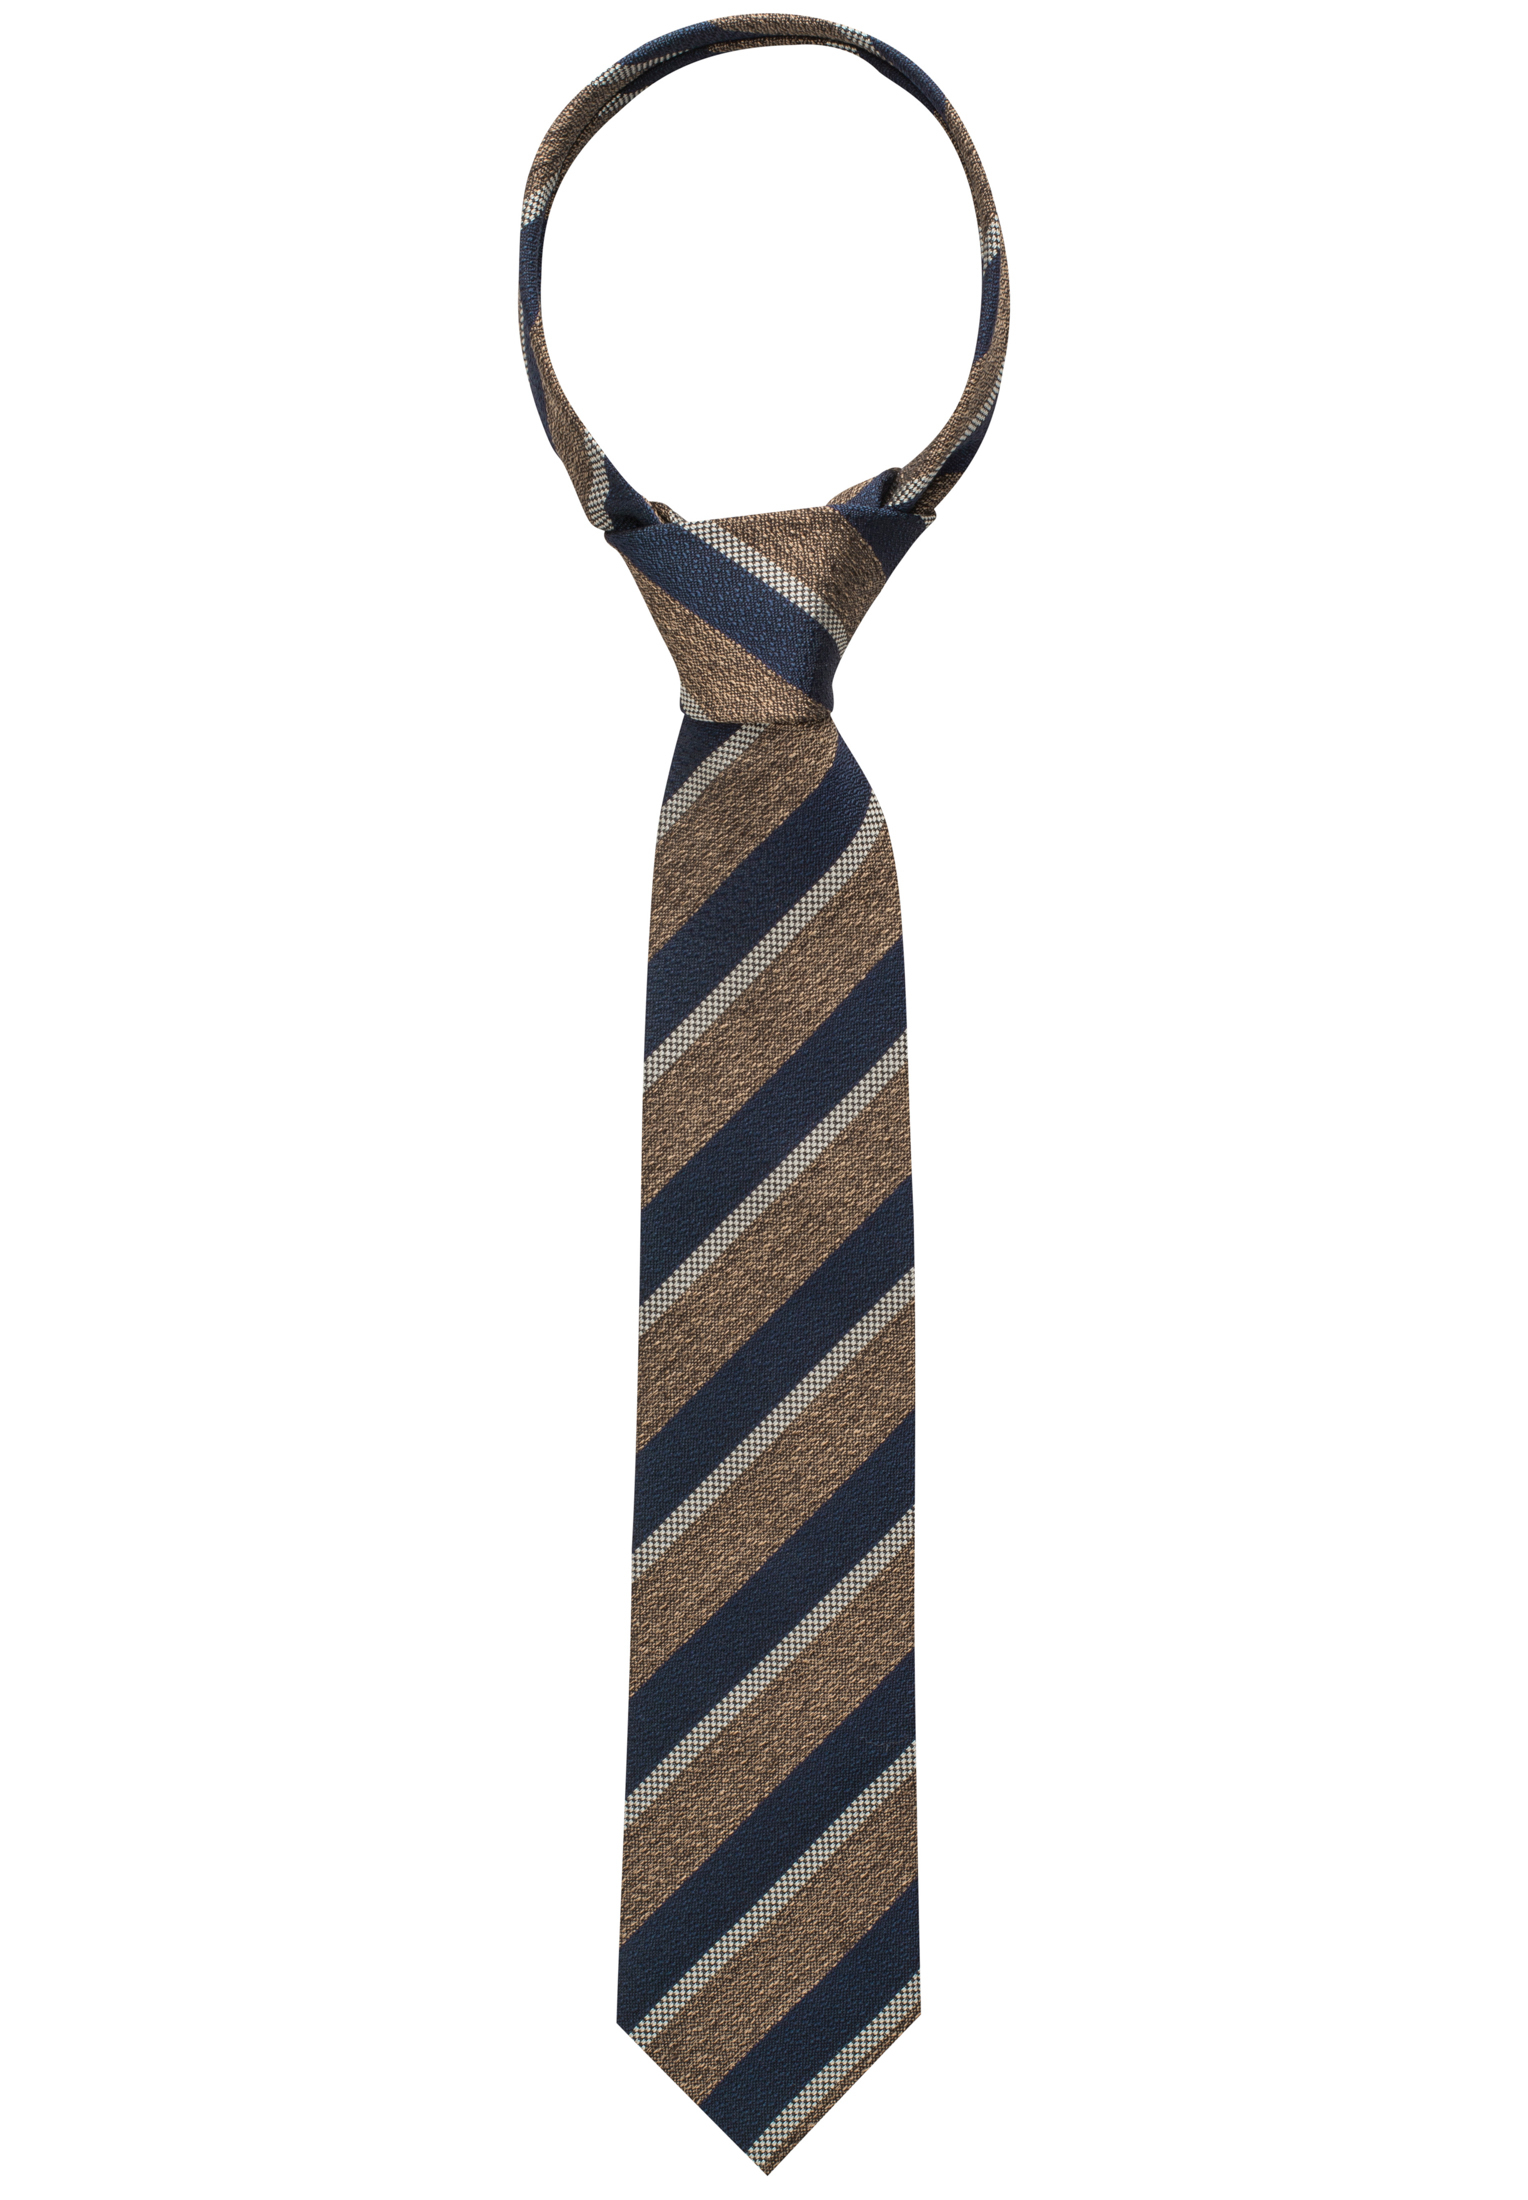 Krawatte in dunkelblau | 142 1AC00473-01-81-142 | | dunkelblau kariert